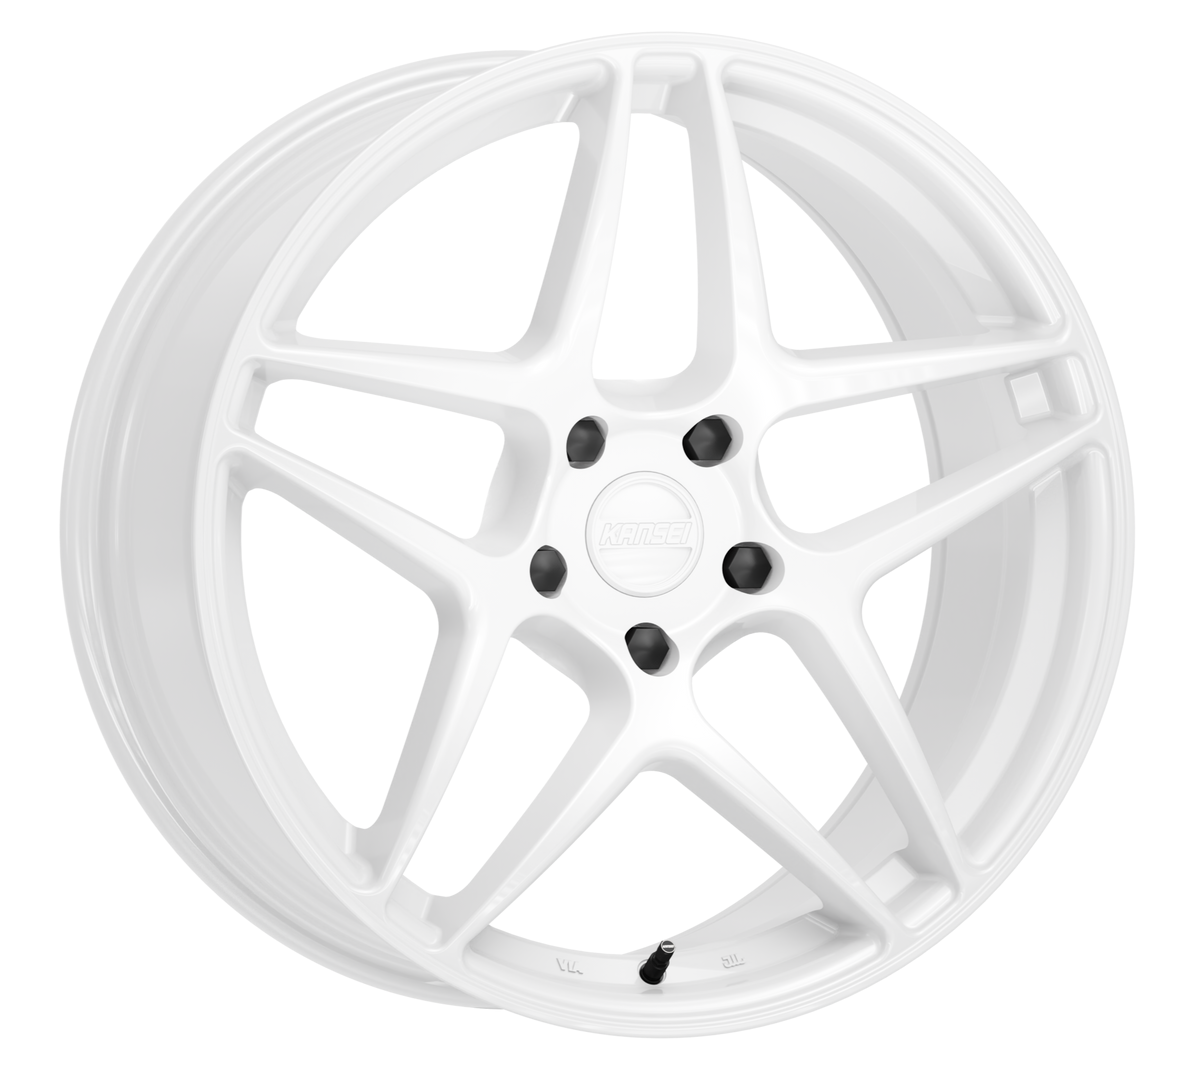 K15W ASTRO Wheel, Size: 19" x 9.50", Bolt Pattern: 5 x 120 mm, Backspace: 5.72" [Finish: Gloss White]